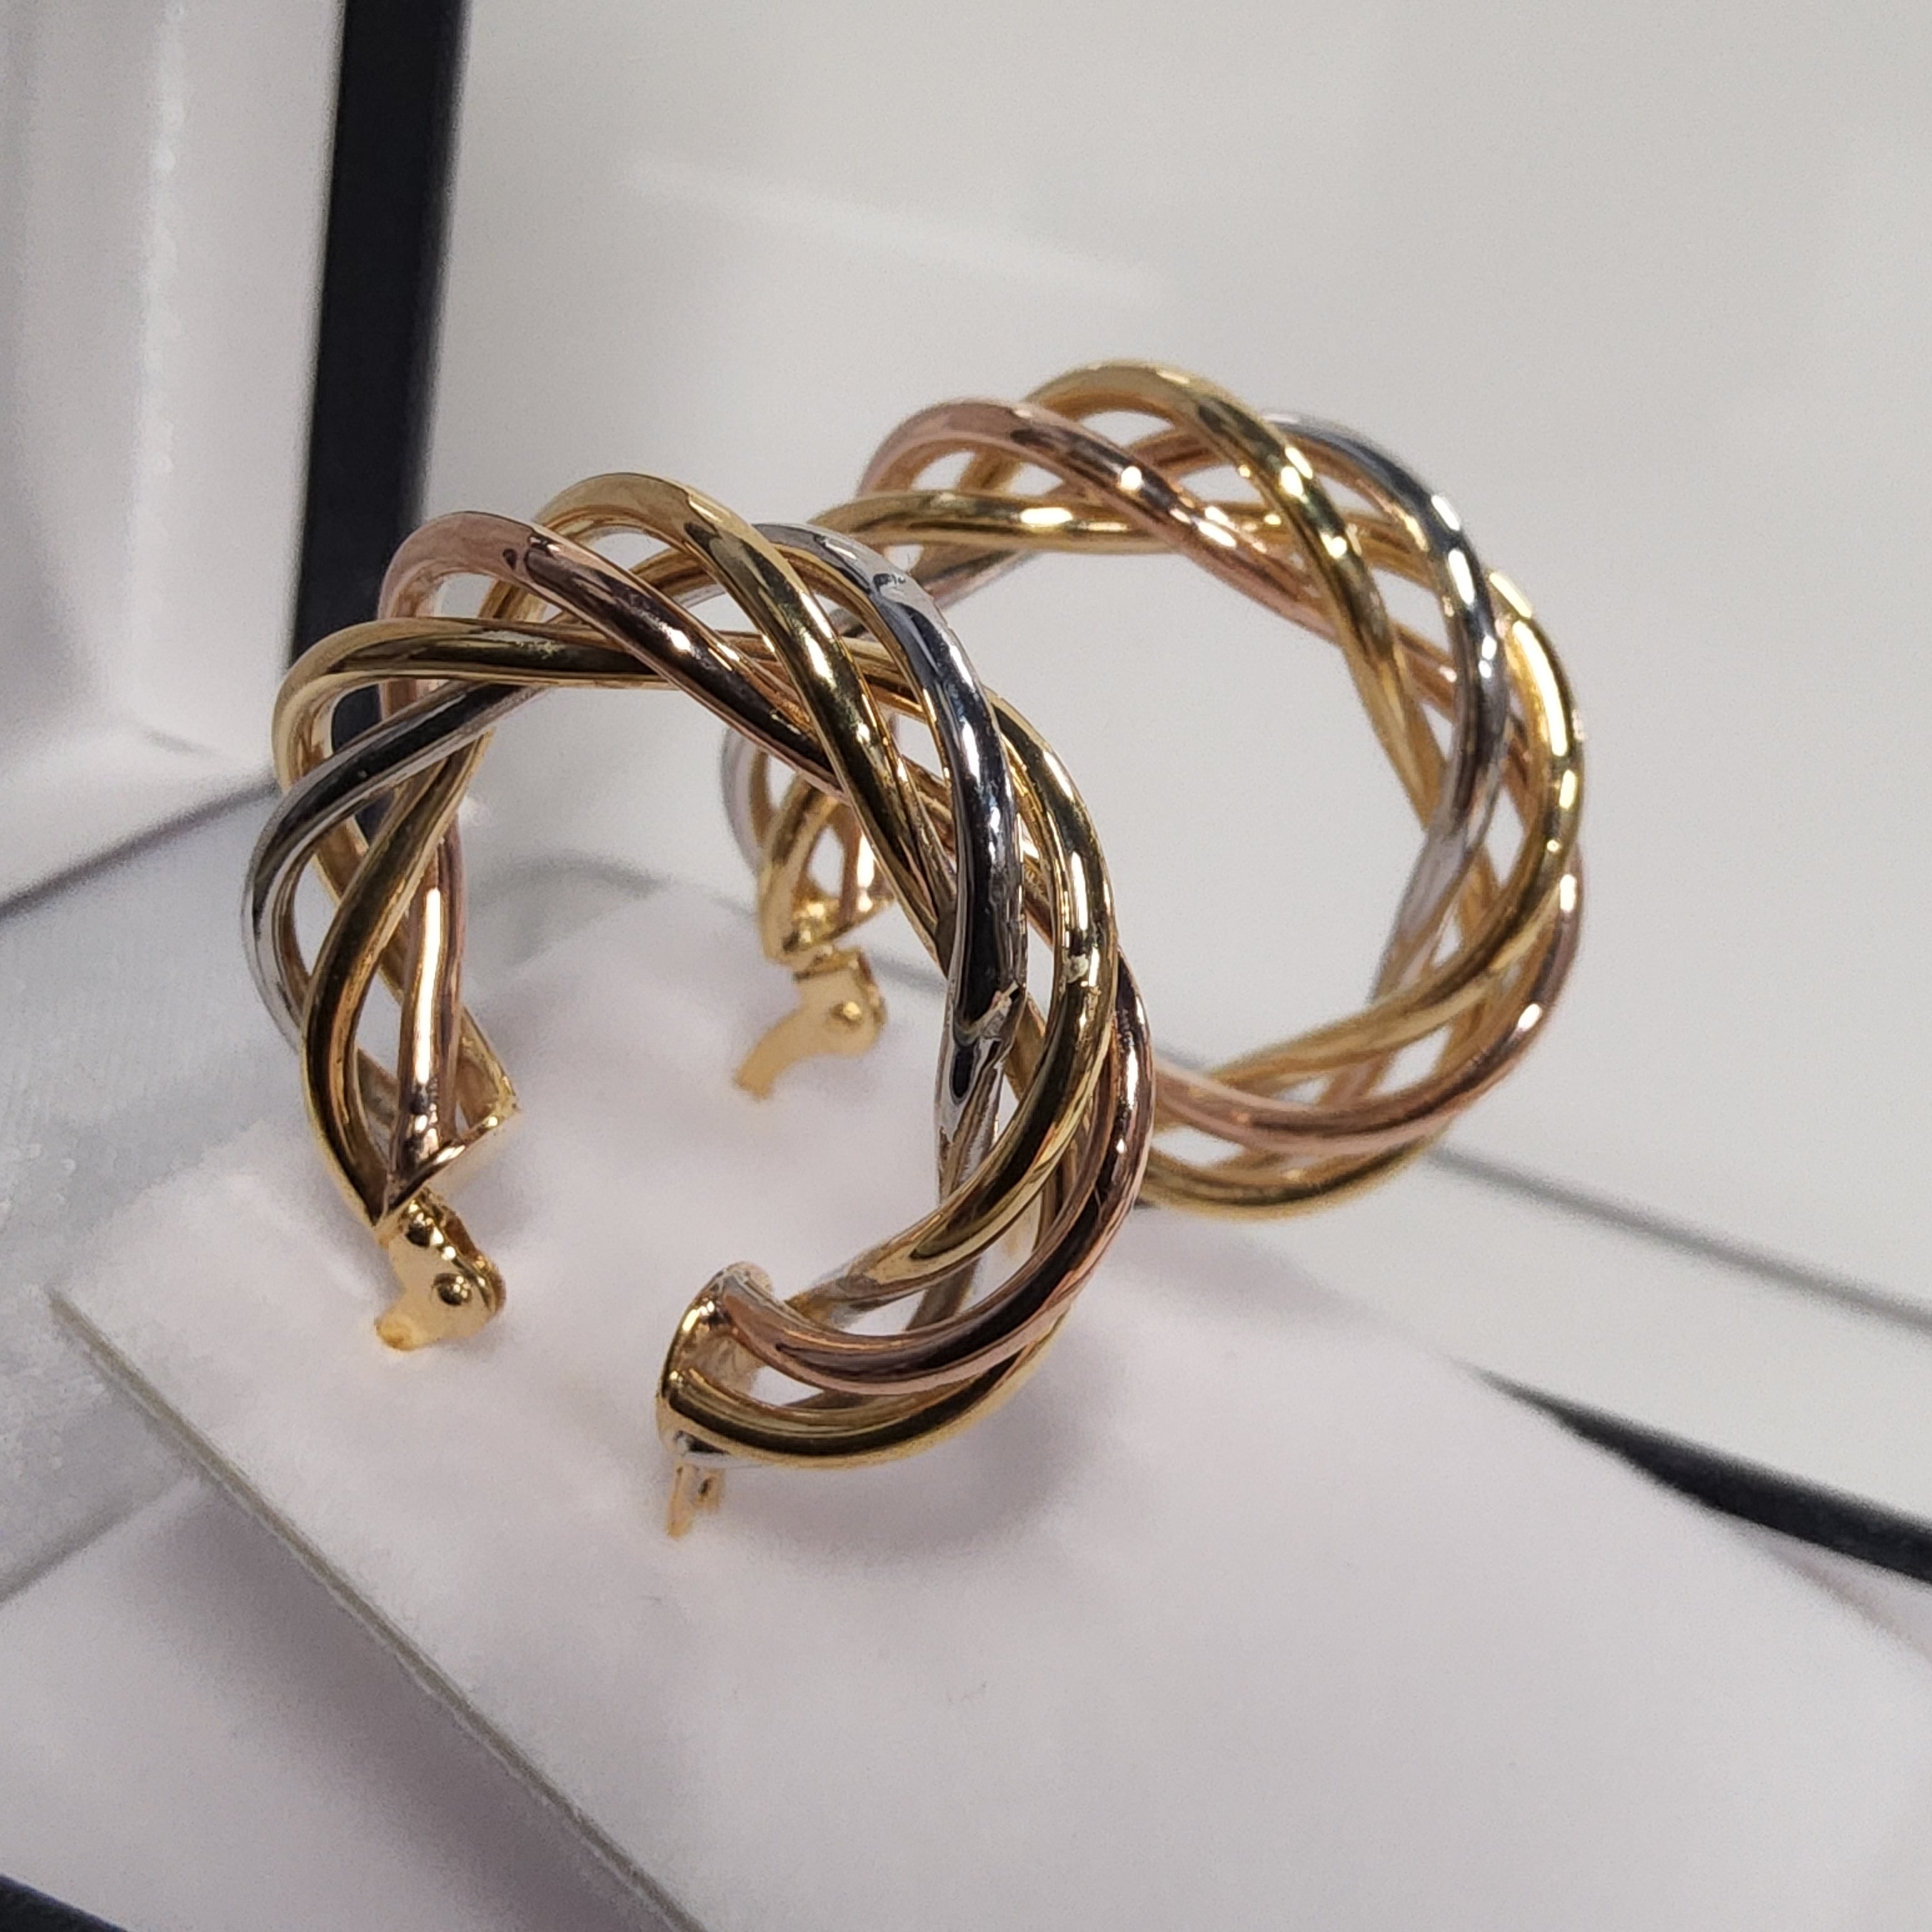 Tri-Colour Gold Hoop Earrings 24mm - 303